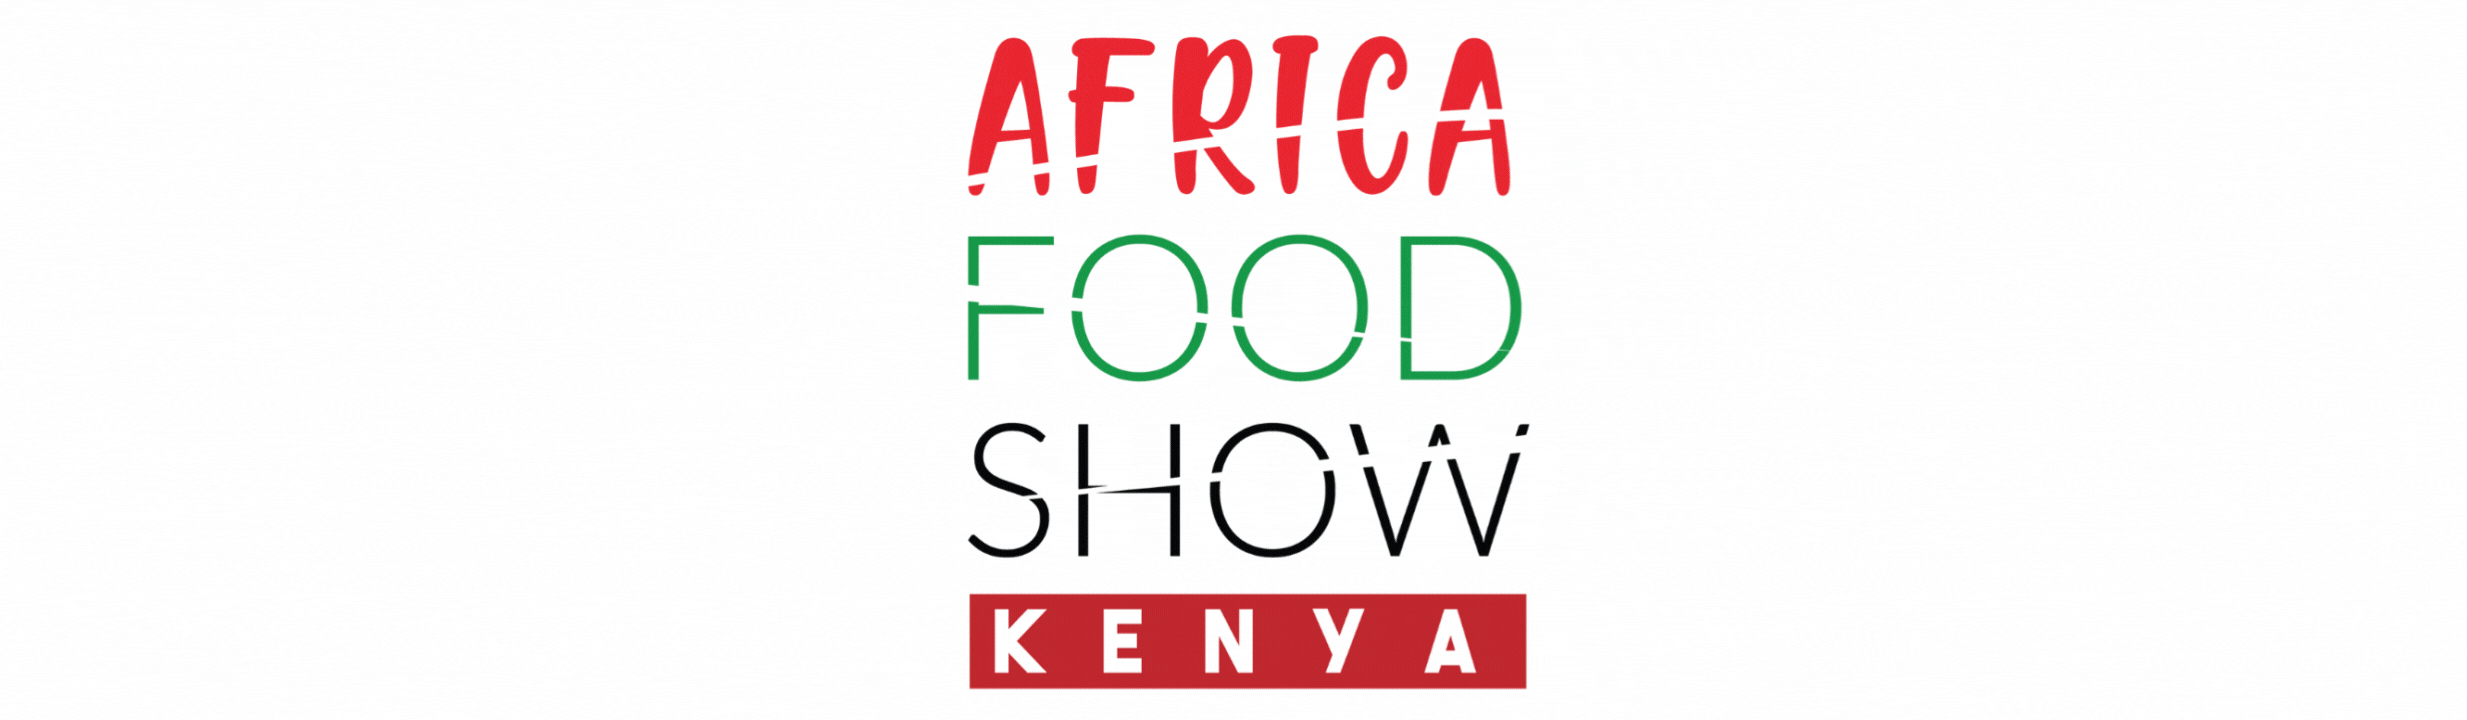 Africa Food Show Kenya, Nairobi, Kenya